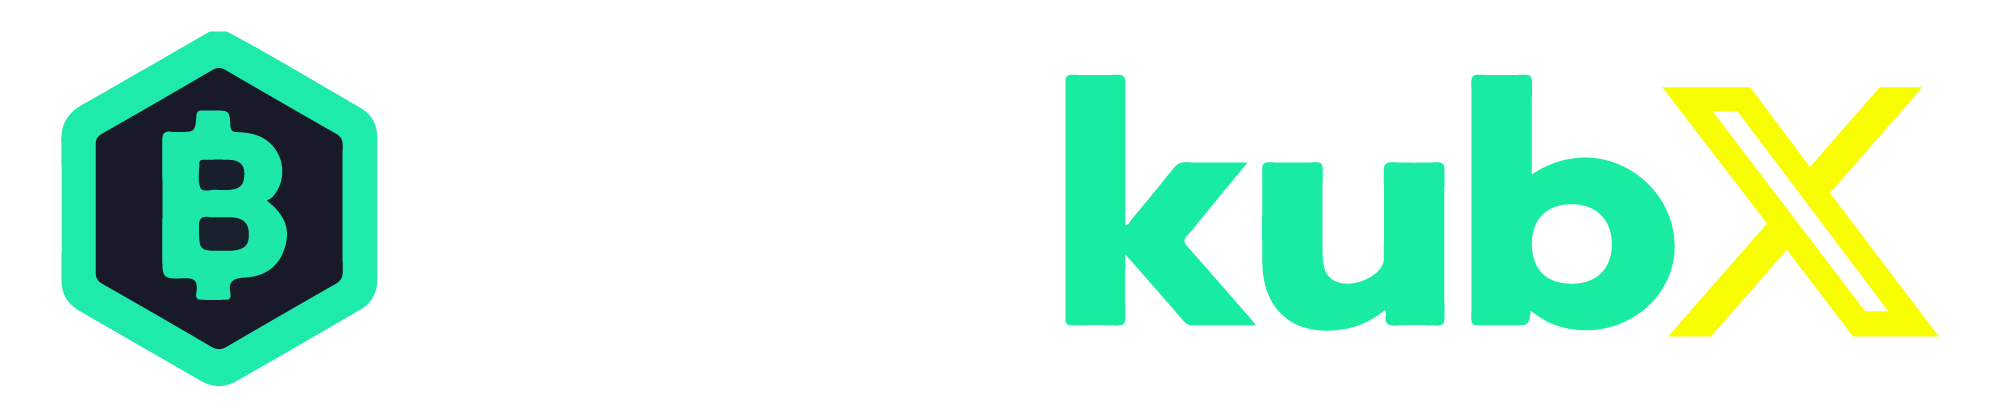 logo365kub-register